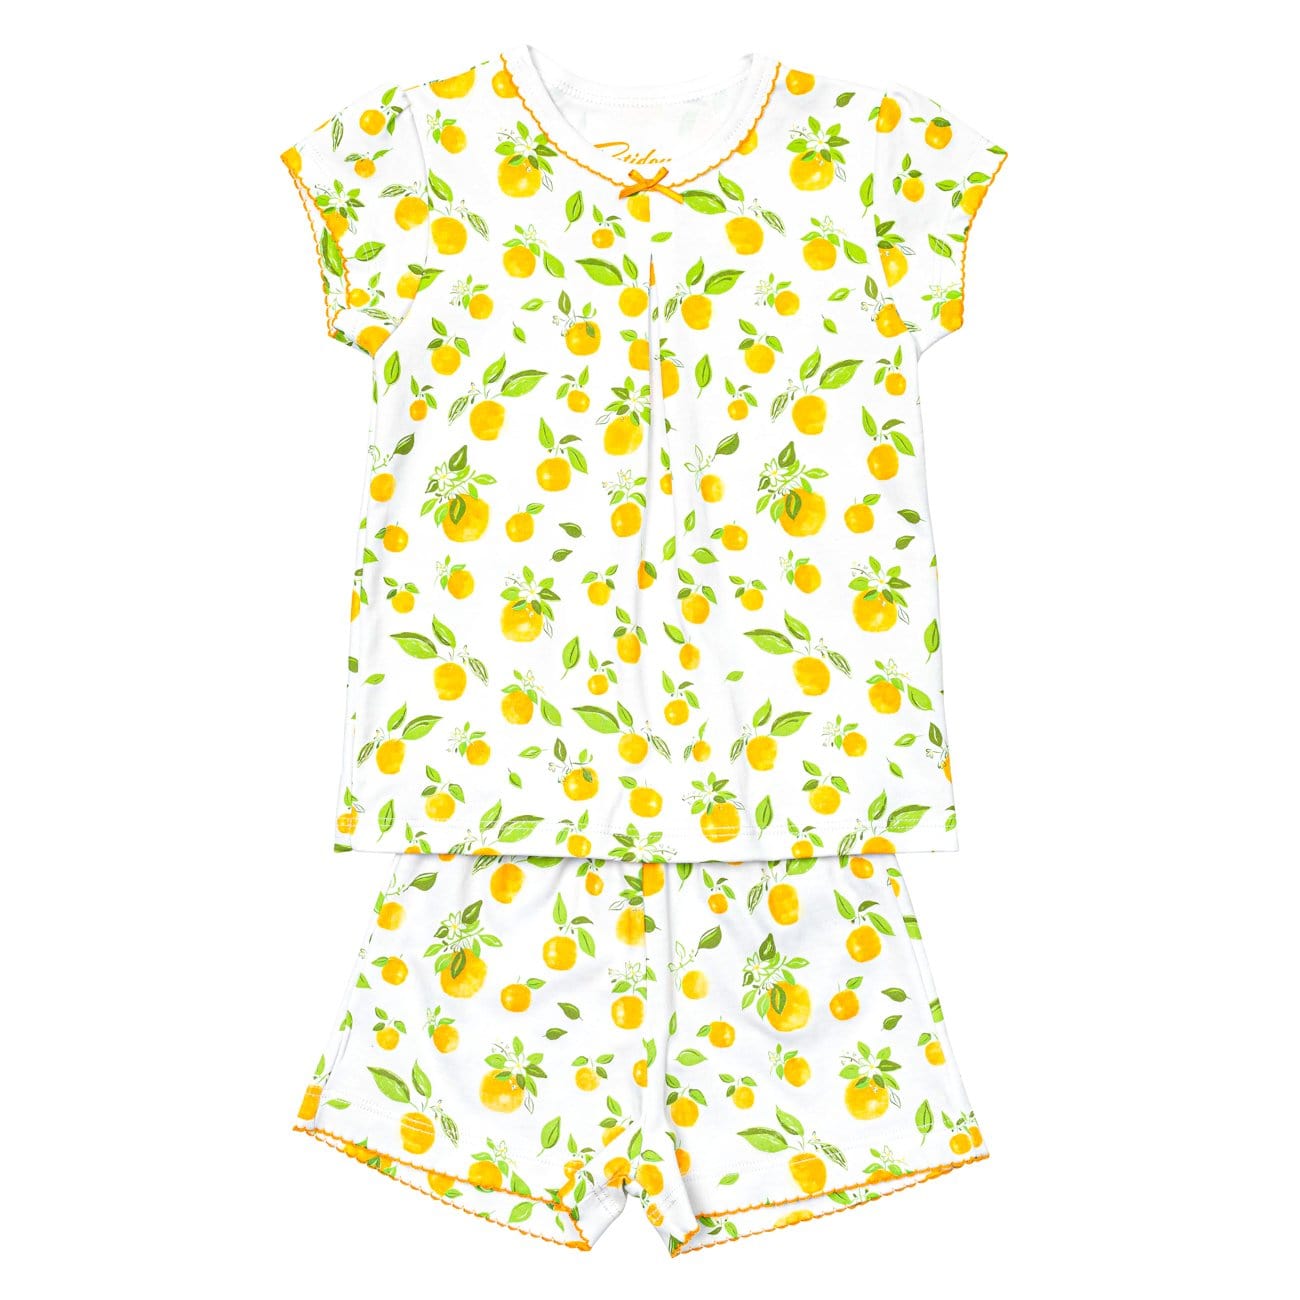 Petidoux Clothing / PJs Orange Blossom Summer PJs